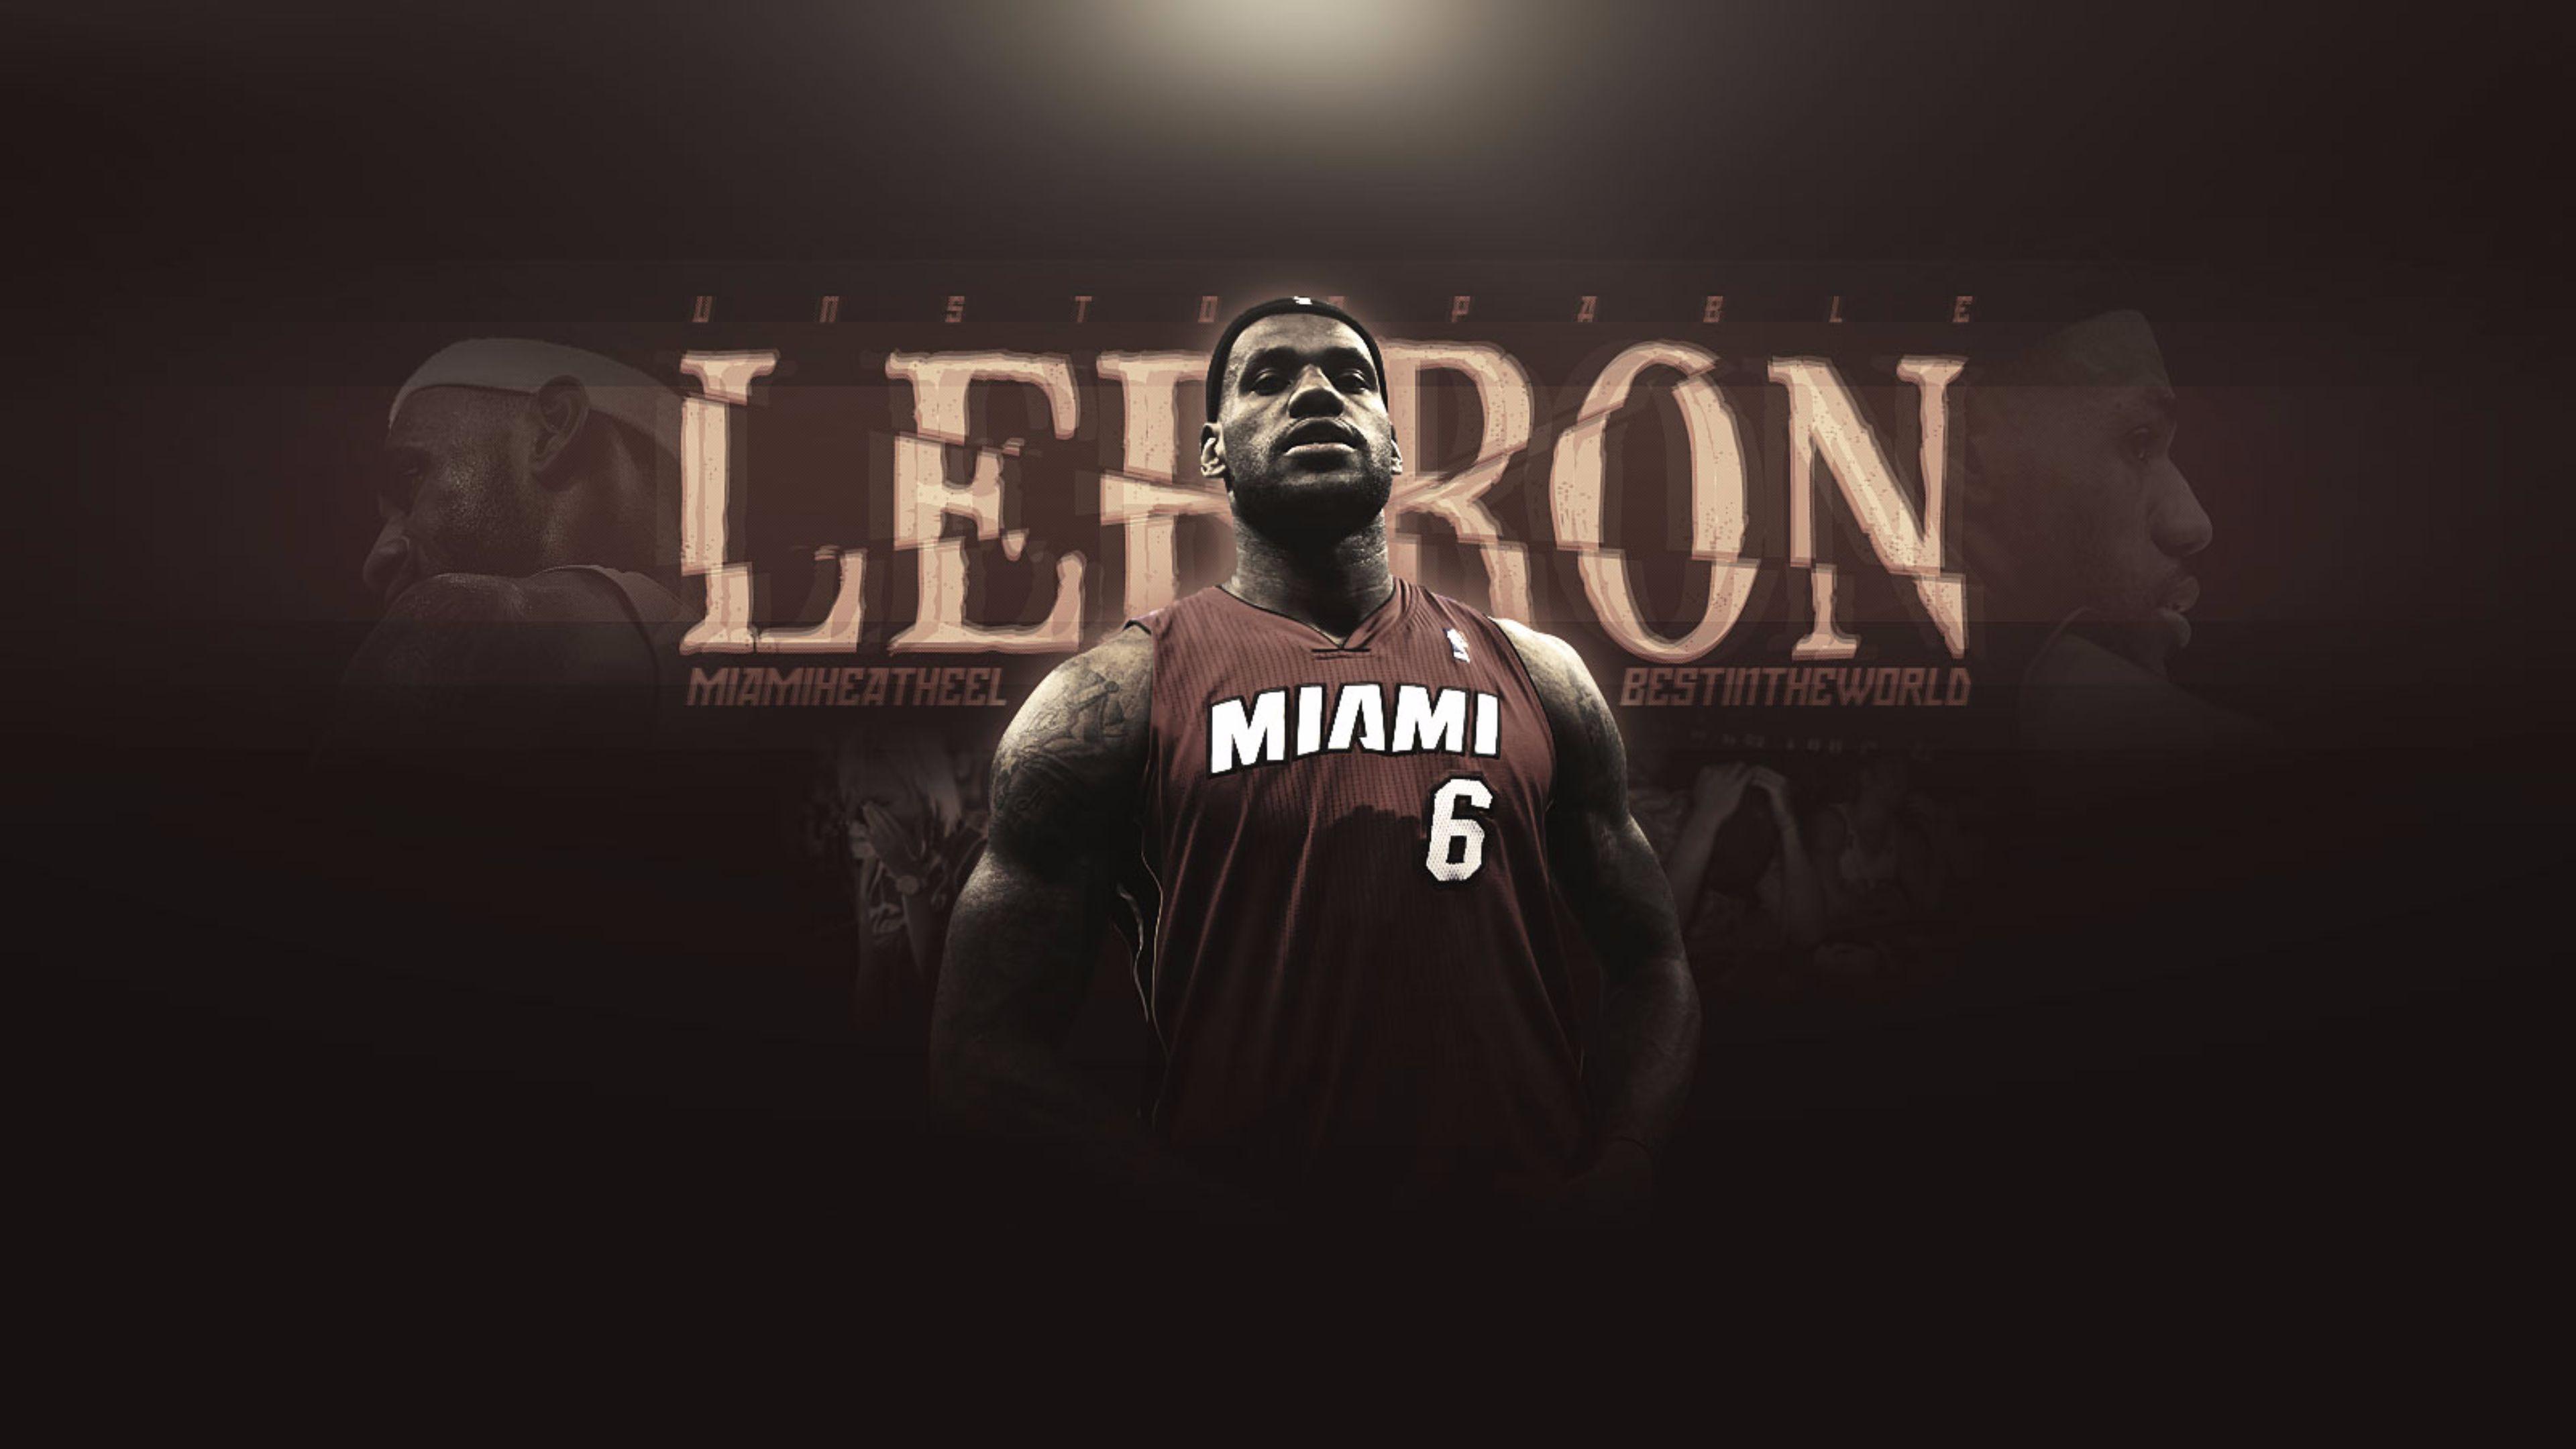 LeBron James Miami Heat 4K Wallpaper Wallpaper. Download